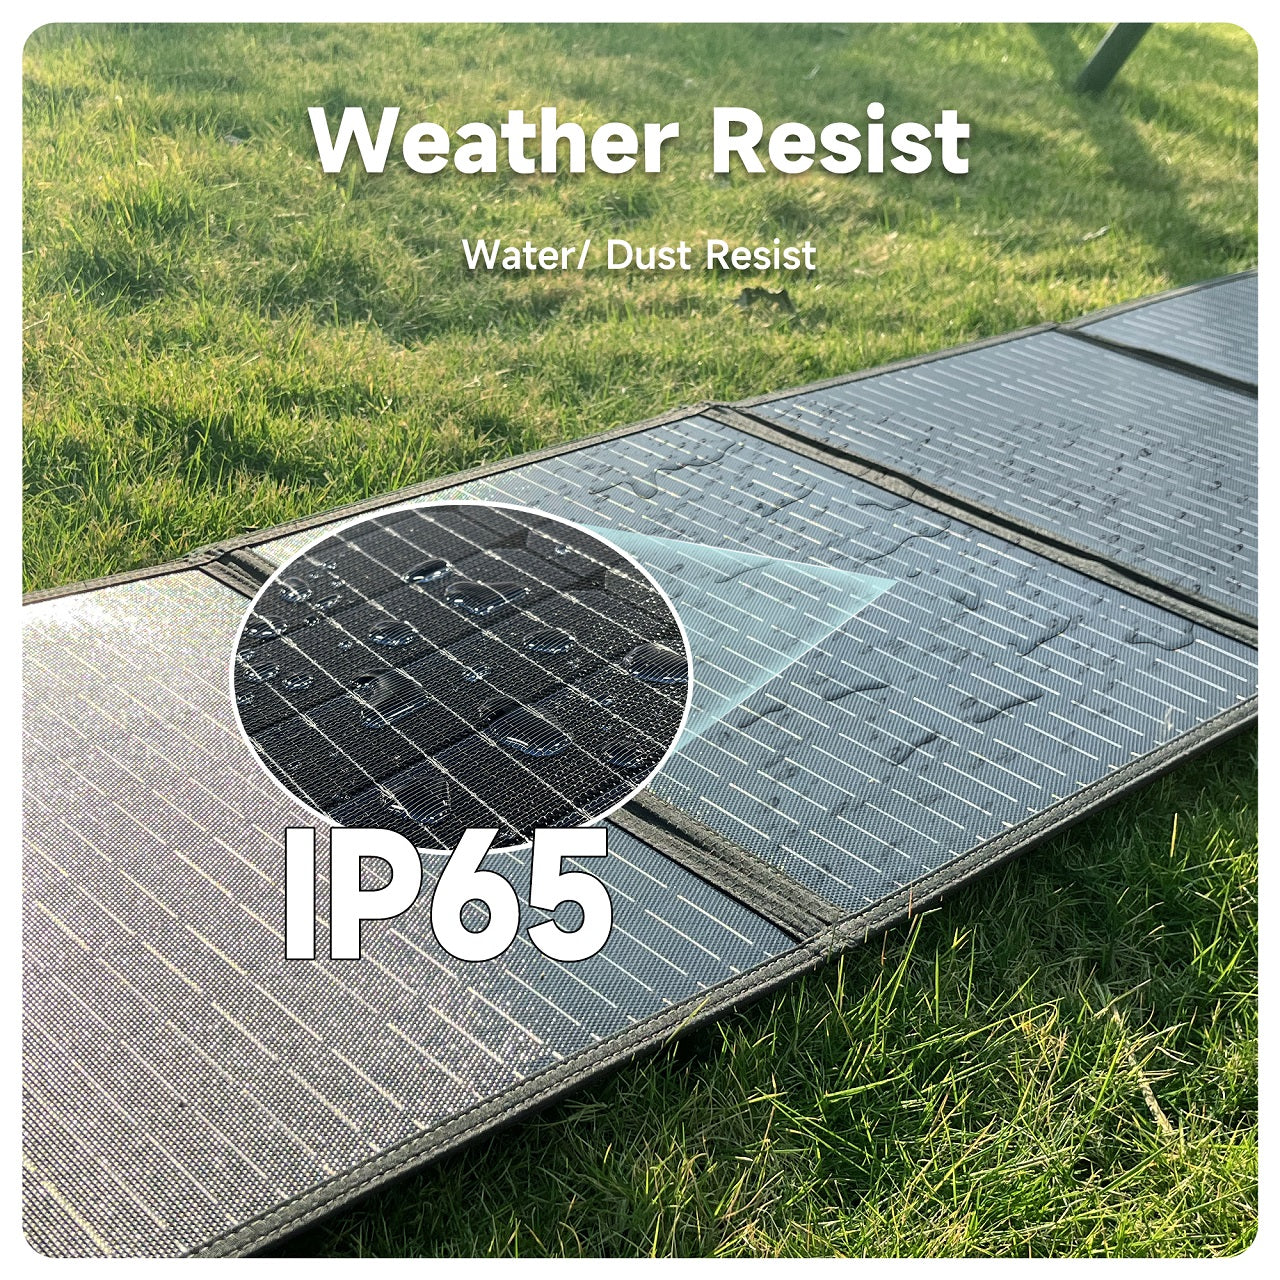 water resist solar panels